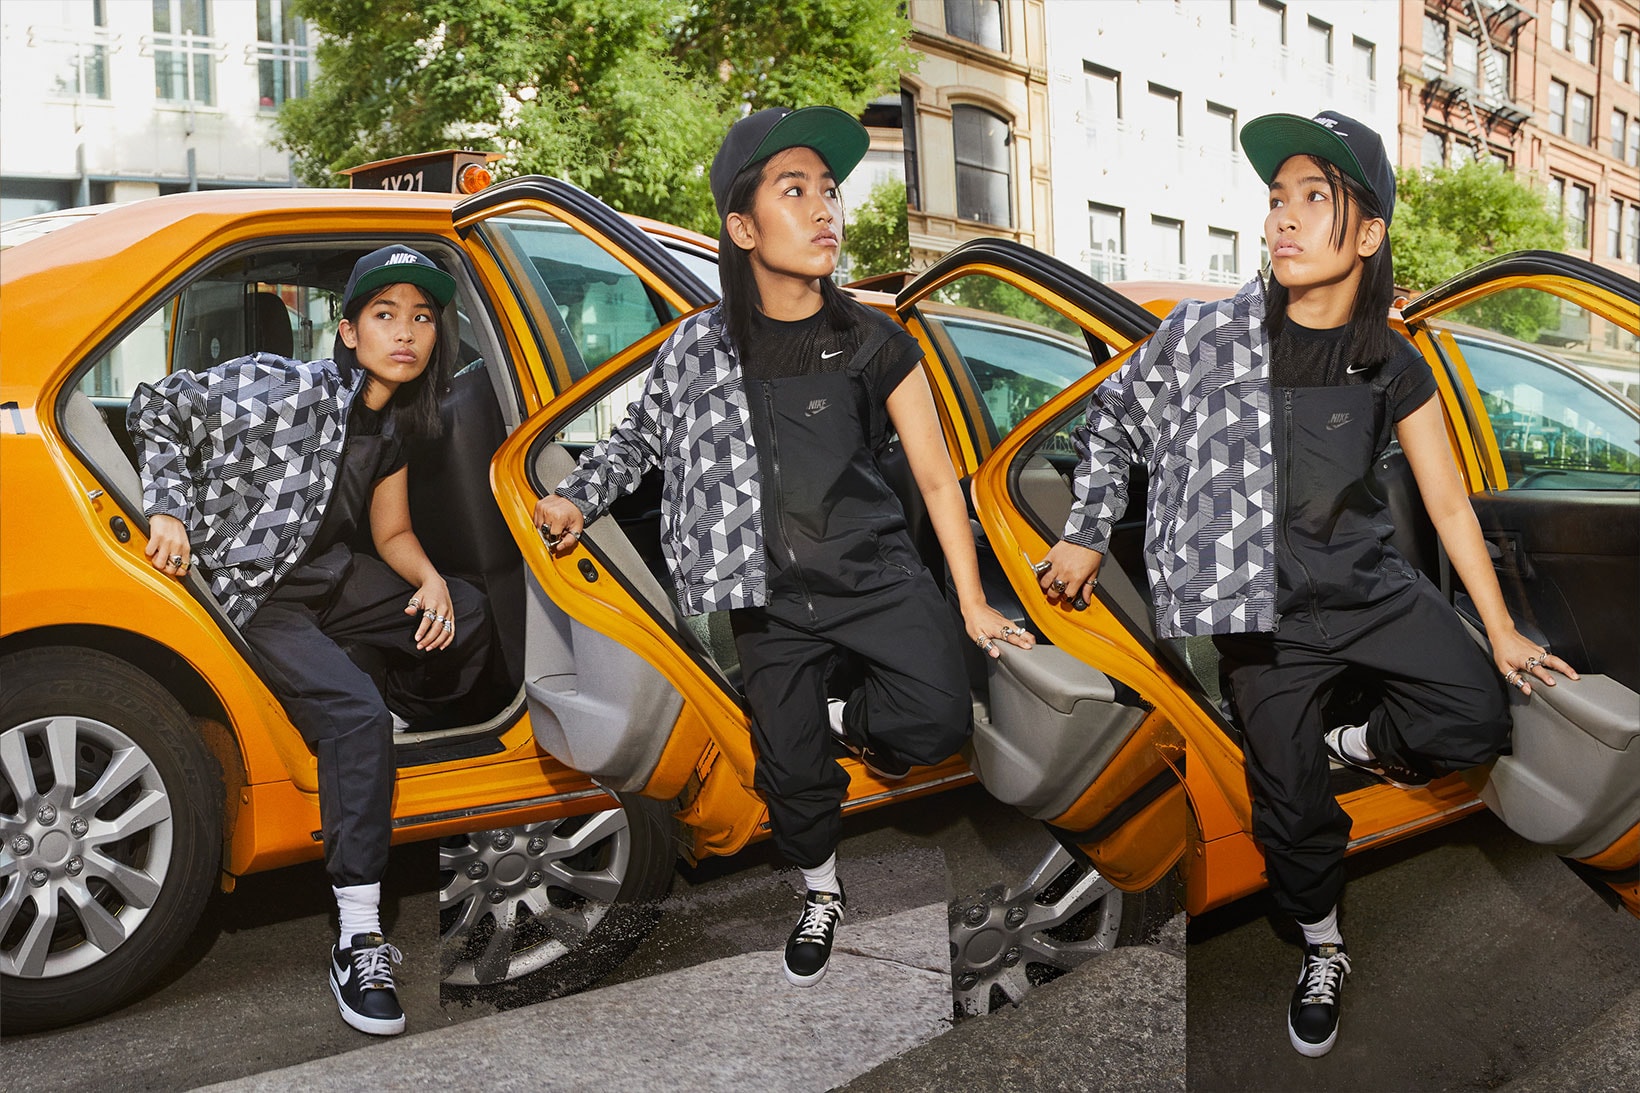 Nike Serena Williams Design Crew Collaboration Taxi Cab Bodysuit Overall